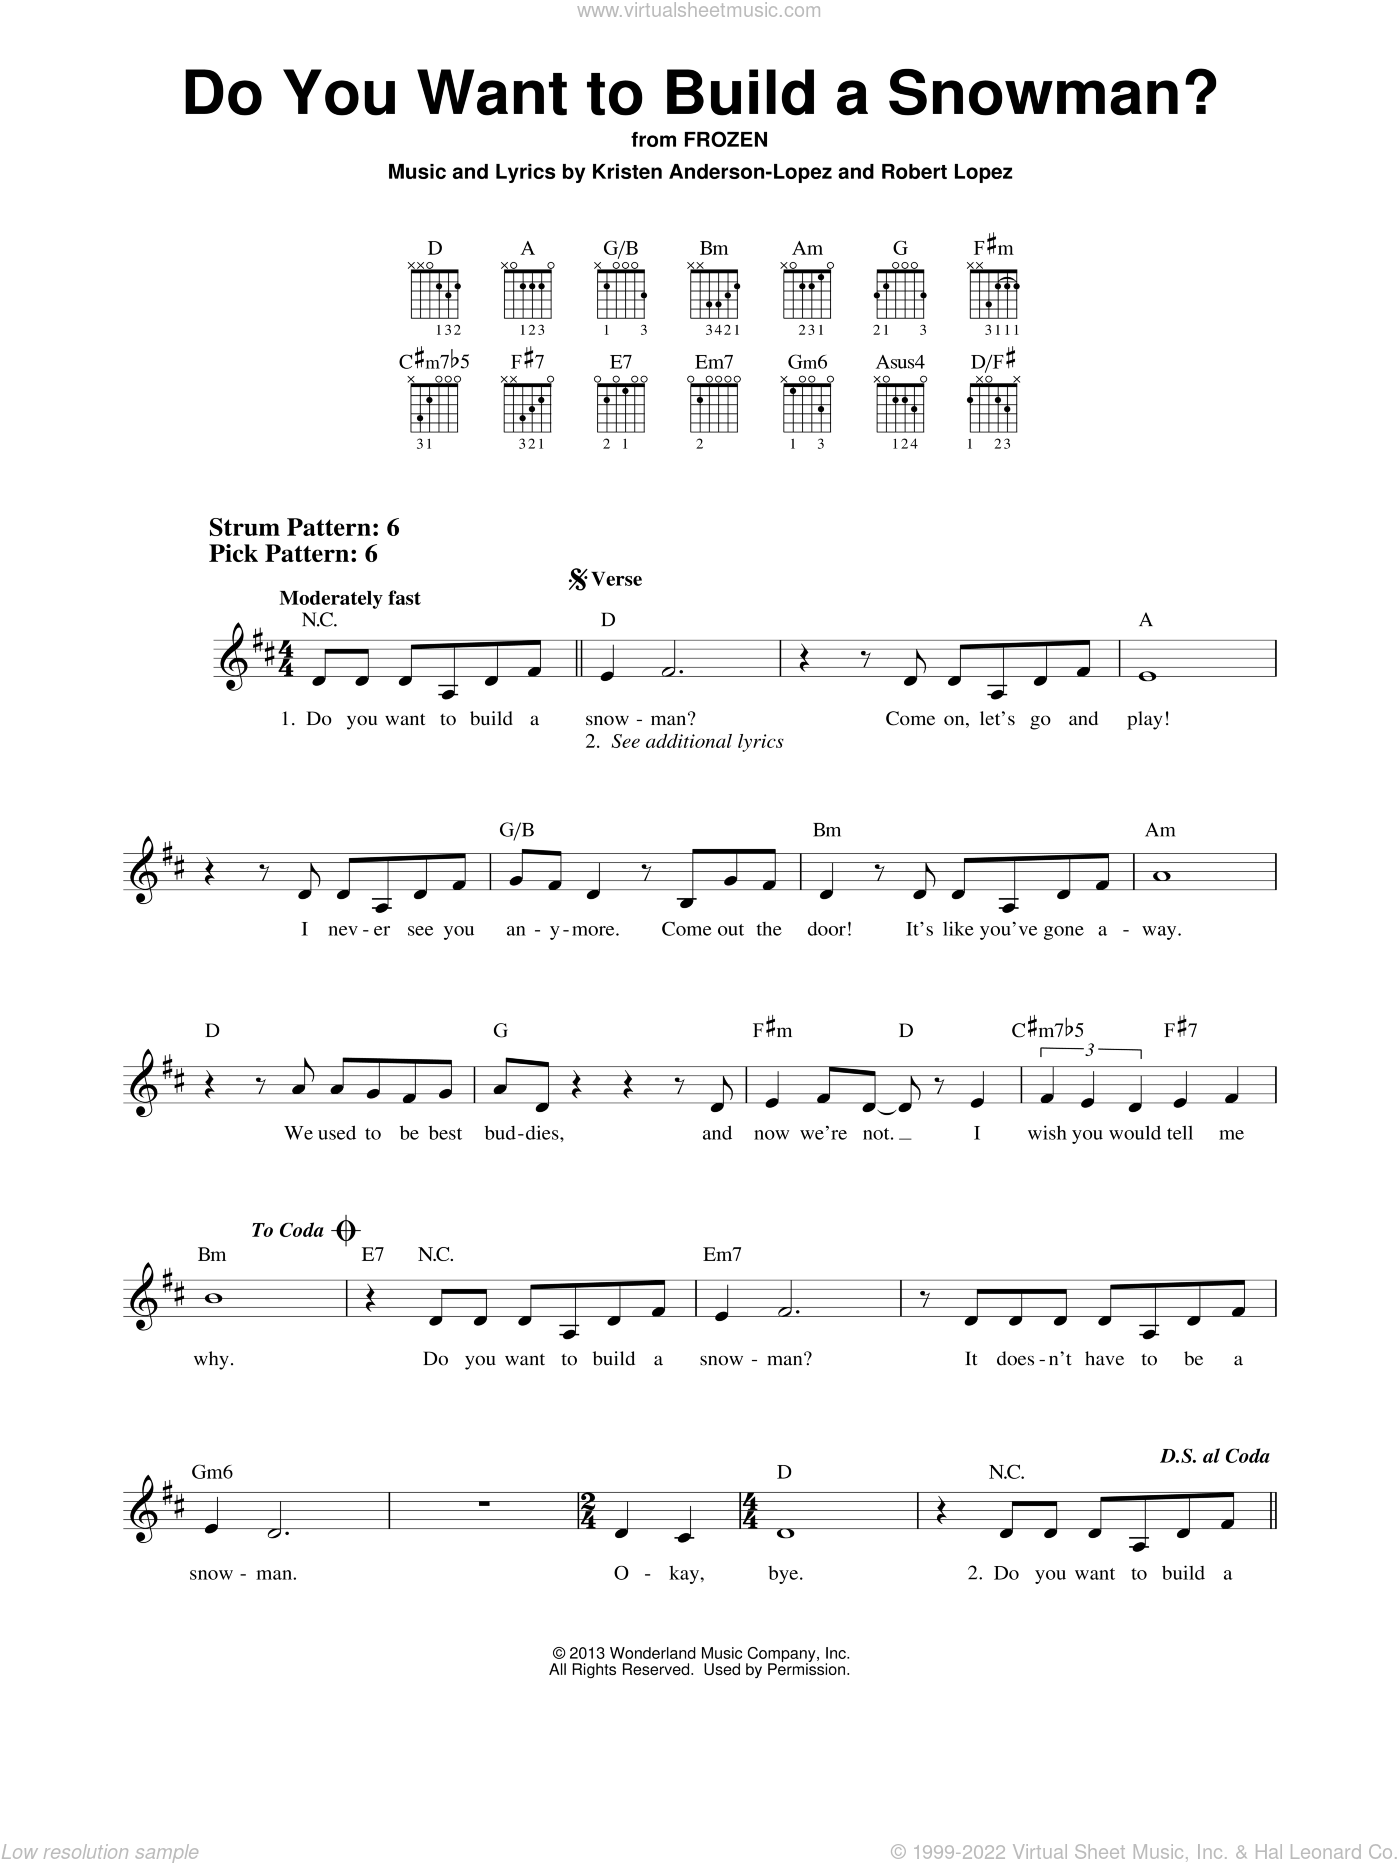 ☆ Do You Want To Build A Snowman?, Sheet Music, Piano Score Free PDF  Download